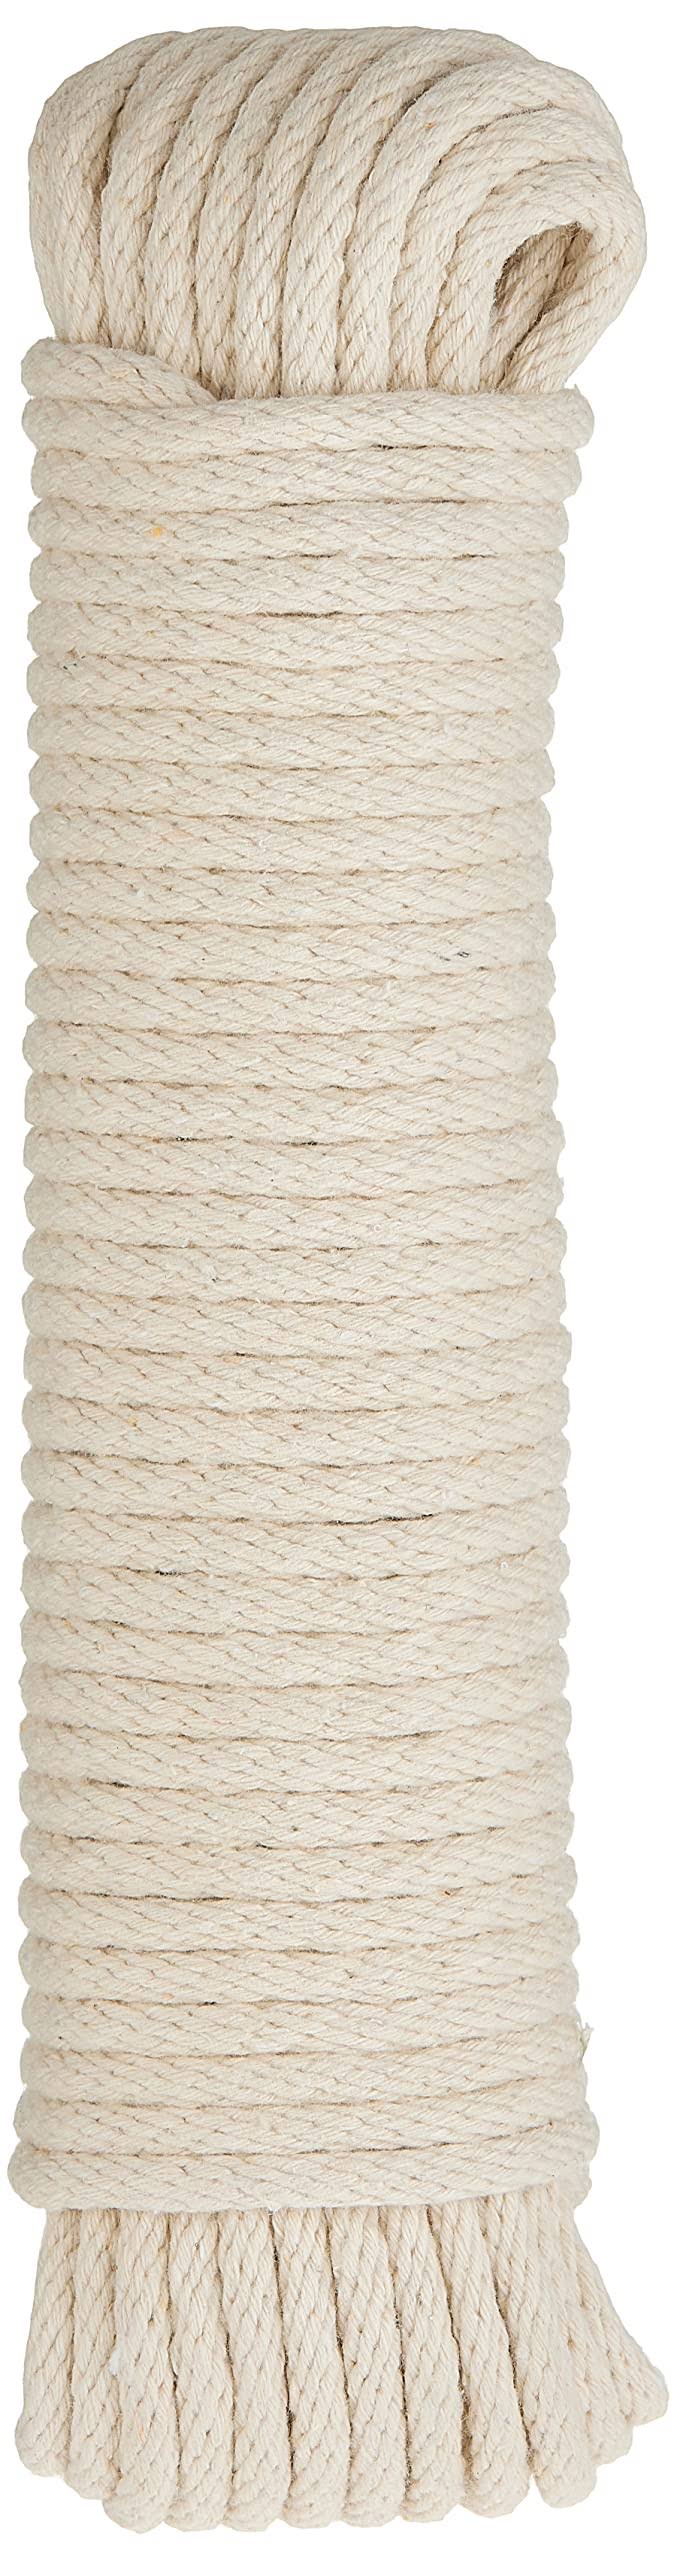 RICHELIEU AMERICA LTD. Sash Cord Smooth Braided Cotton 1/4-In. x 50-Ft. 642031